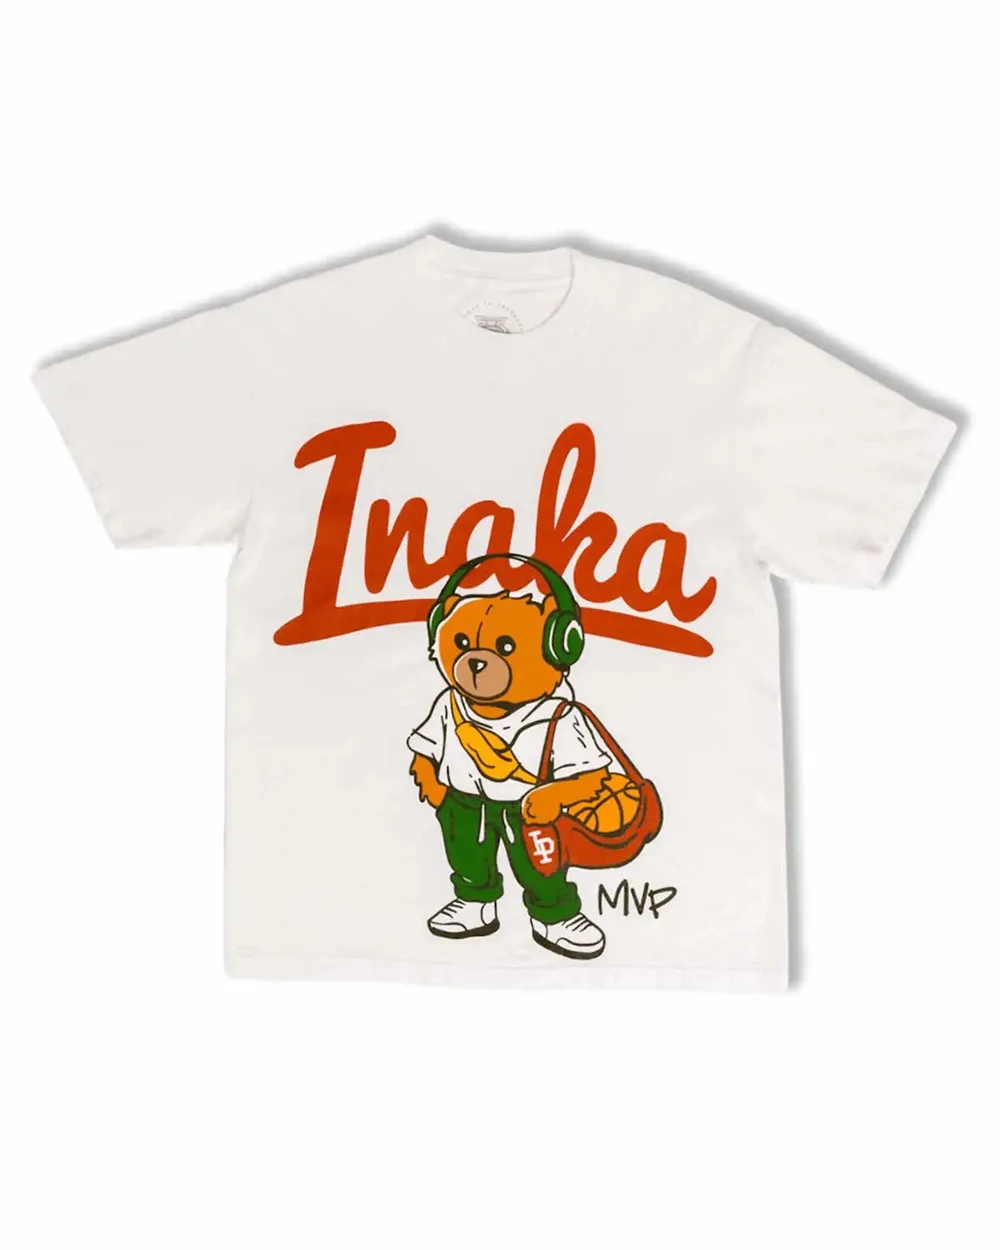 Inaka Power Overized US Size T-shirts dagligen 100% bomull av hög kvalitet Streetwear DTG Printing Technique Sports Basketball Gym IP Tops Tees